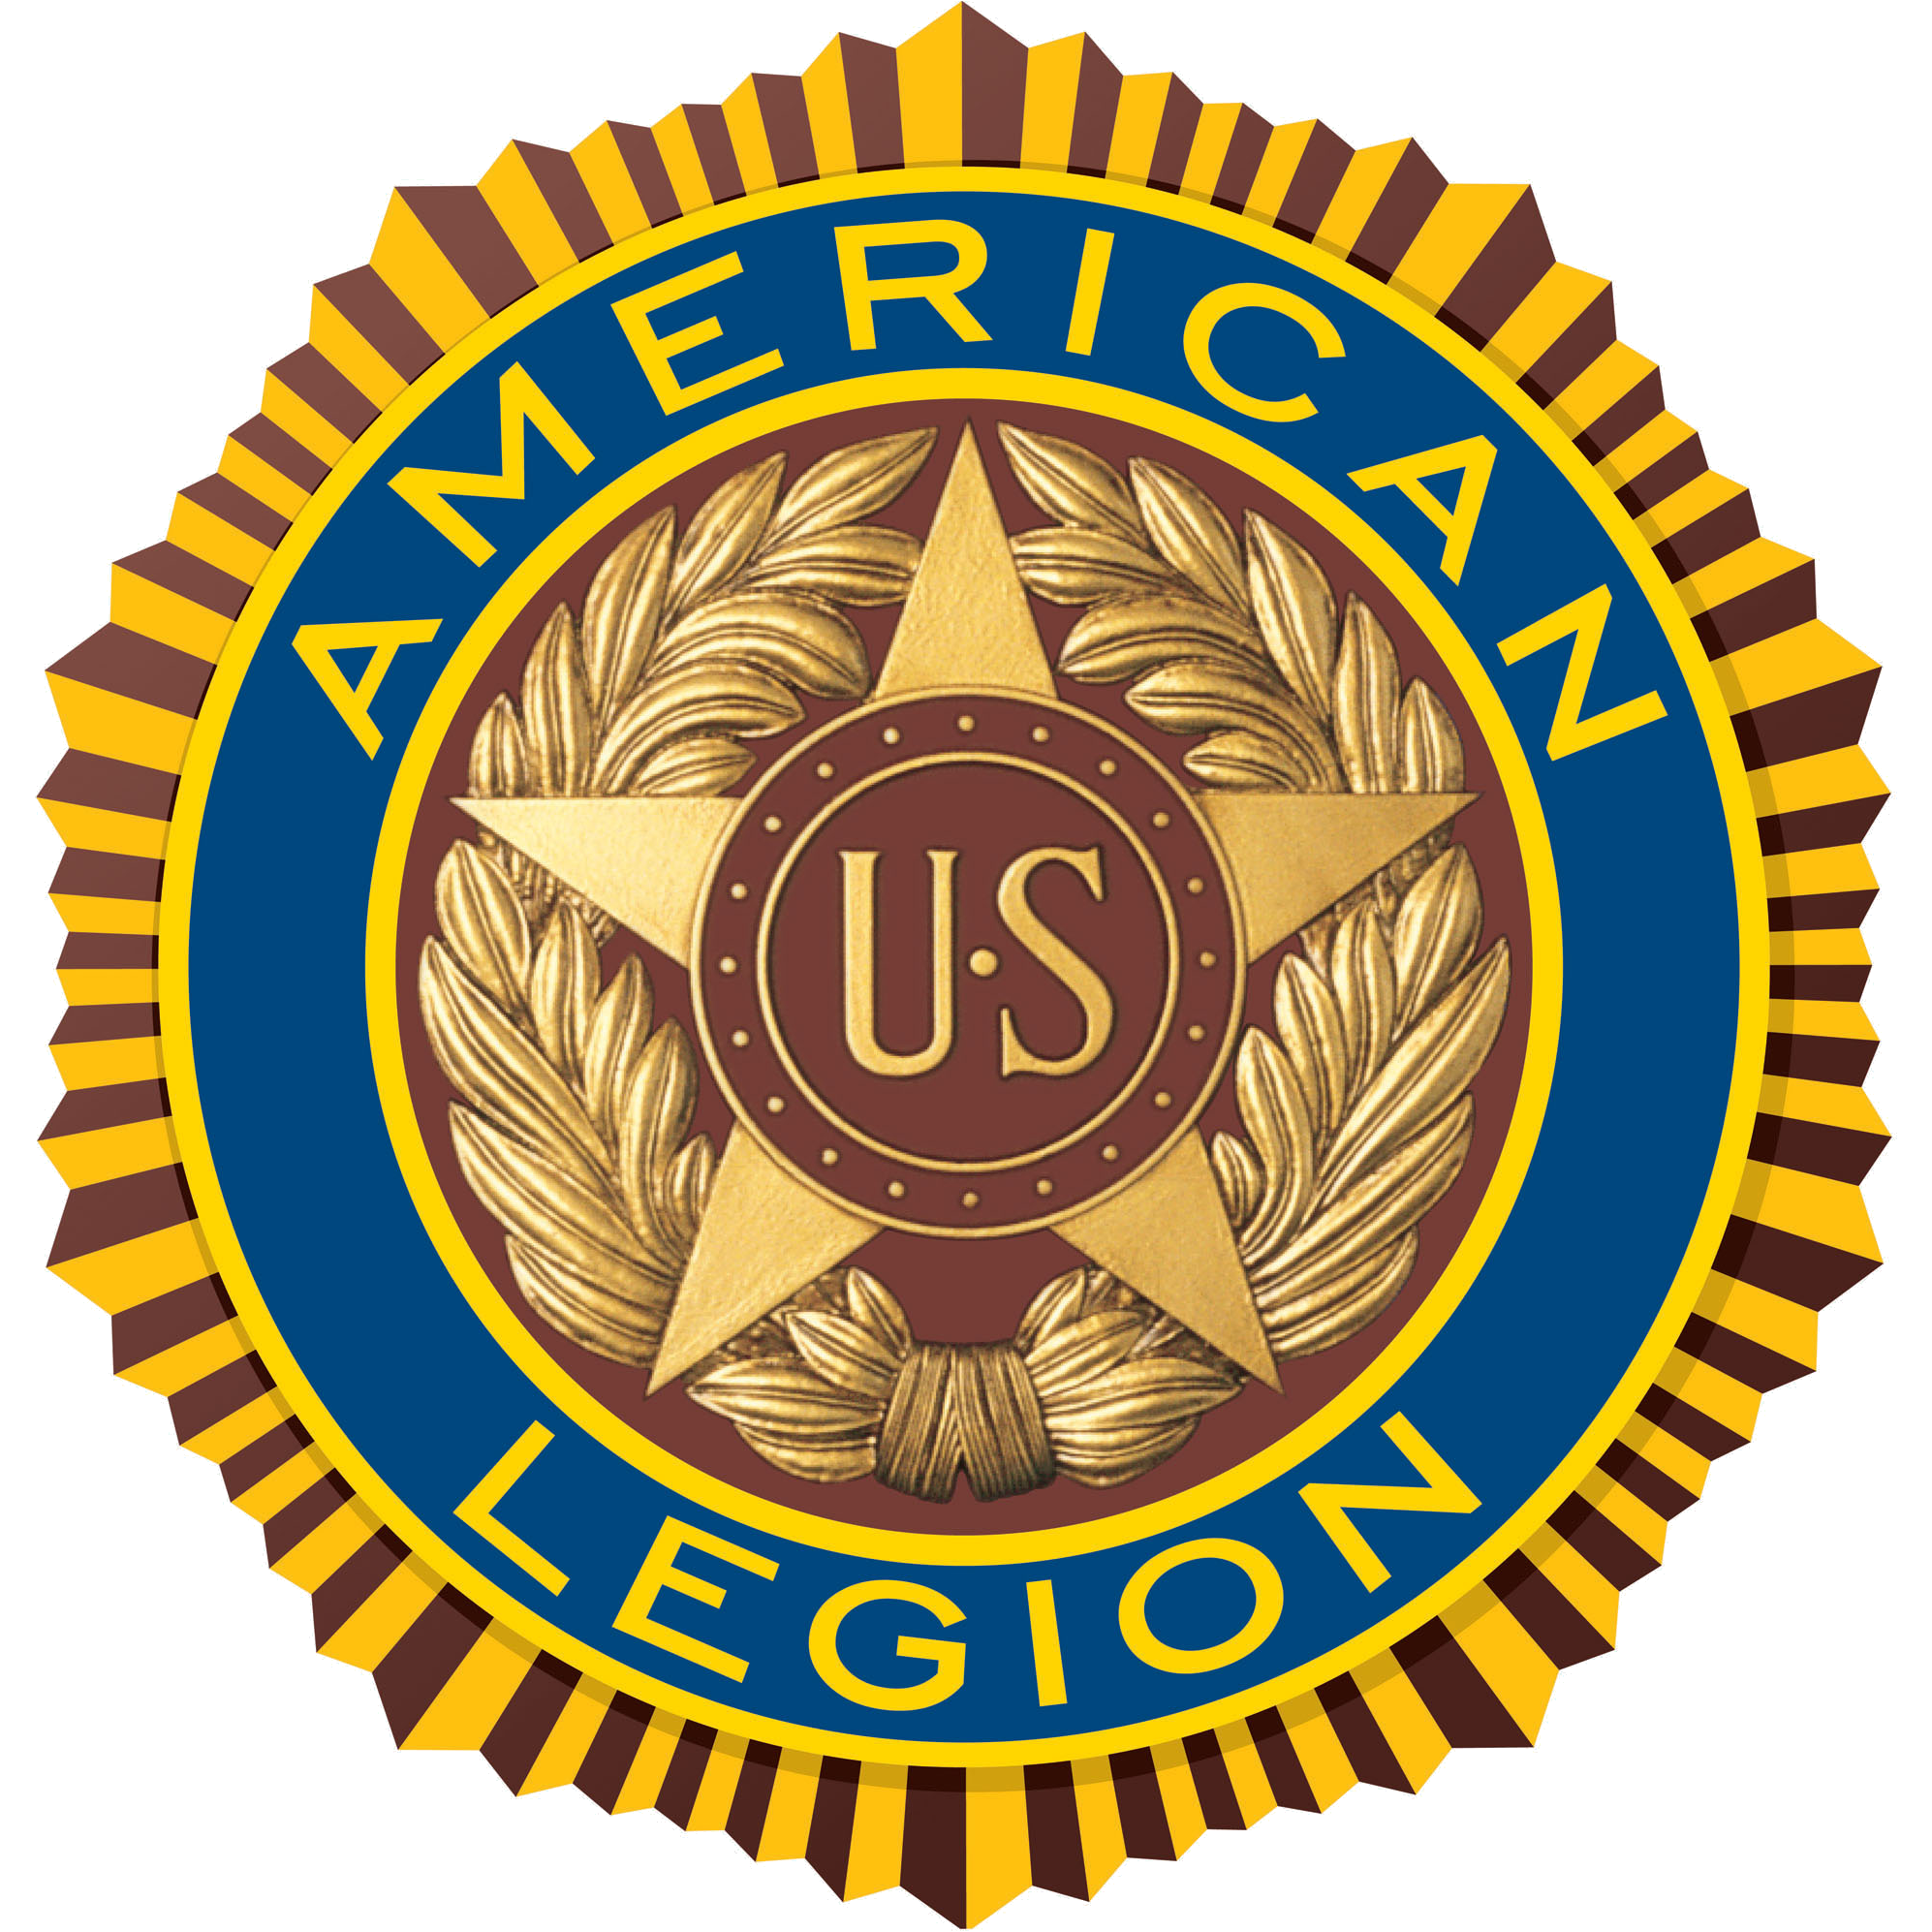 The American Legion - American Legion, Transparent background PNG HD thumbnail